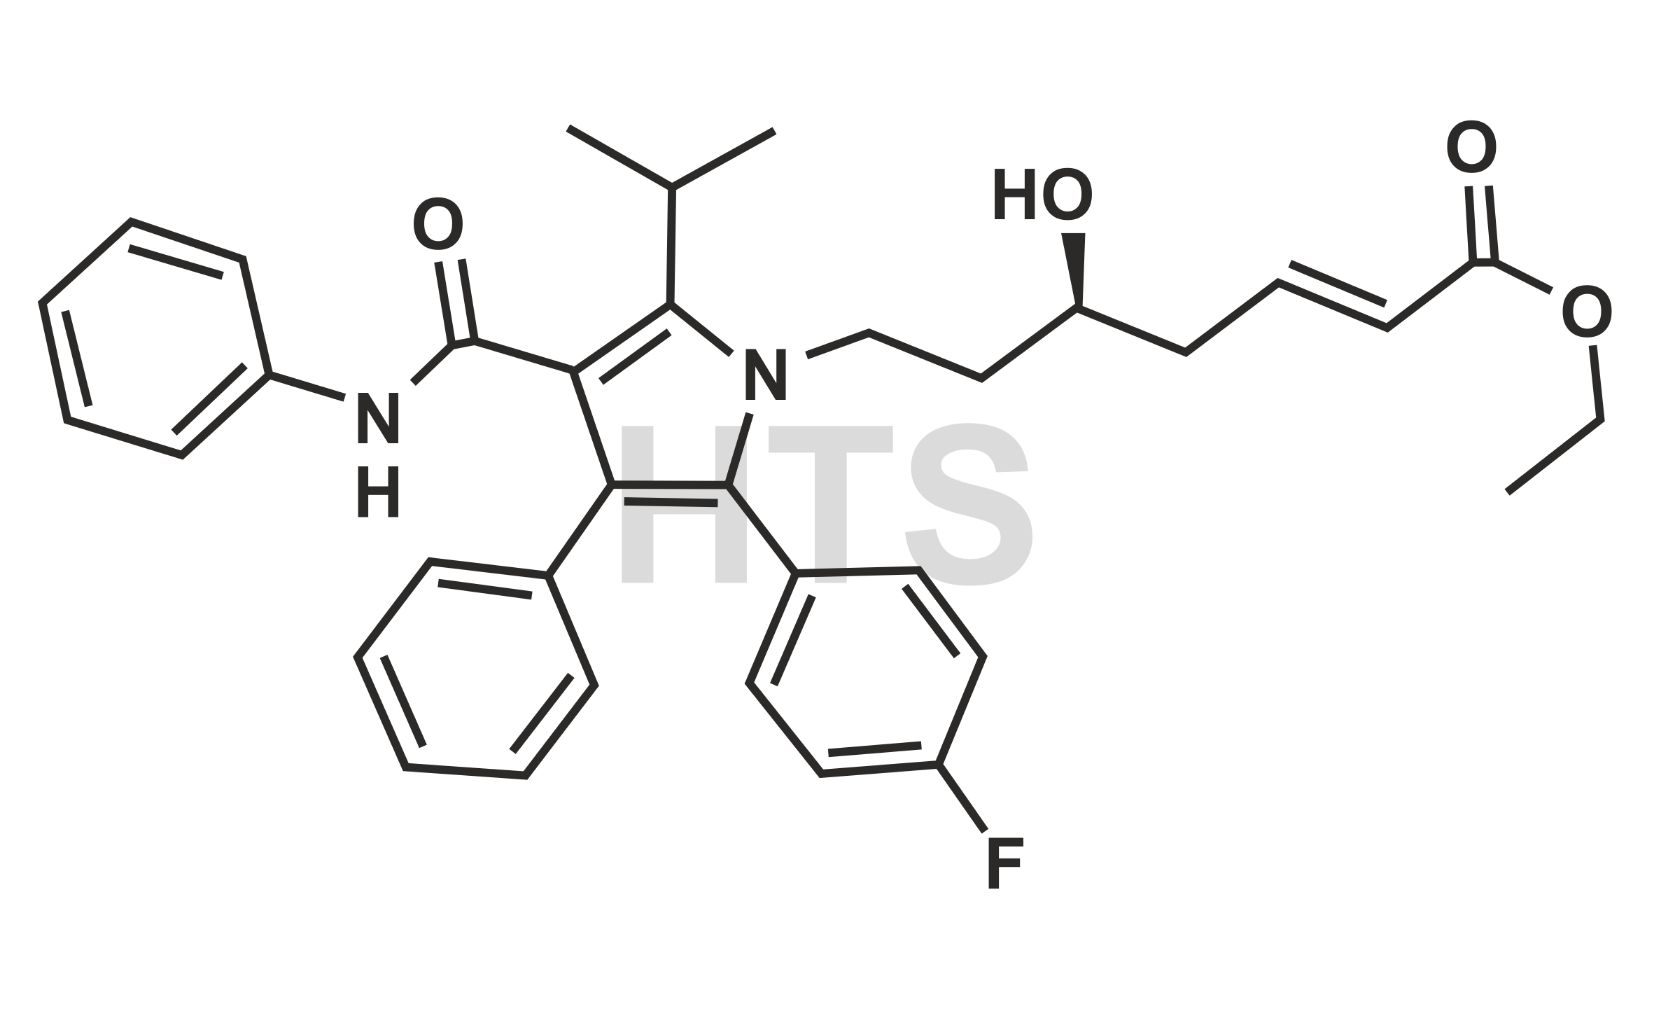 Atorvastatin 3-Deoxy-Hept-2-Enoic Acid Ethyl Ester